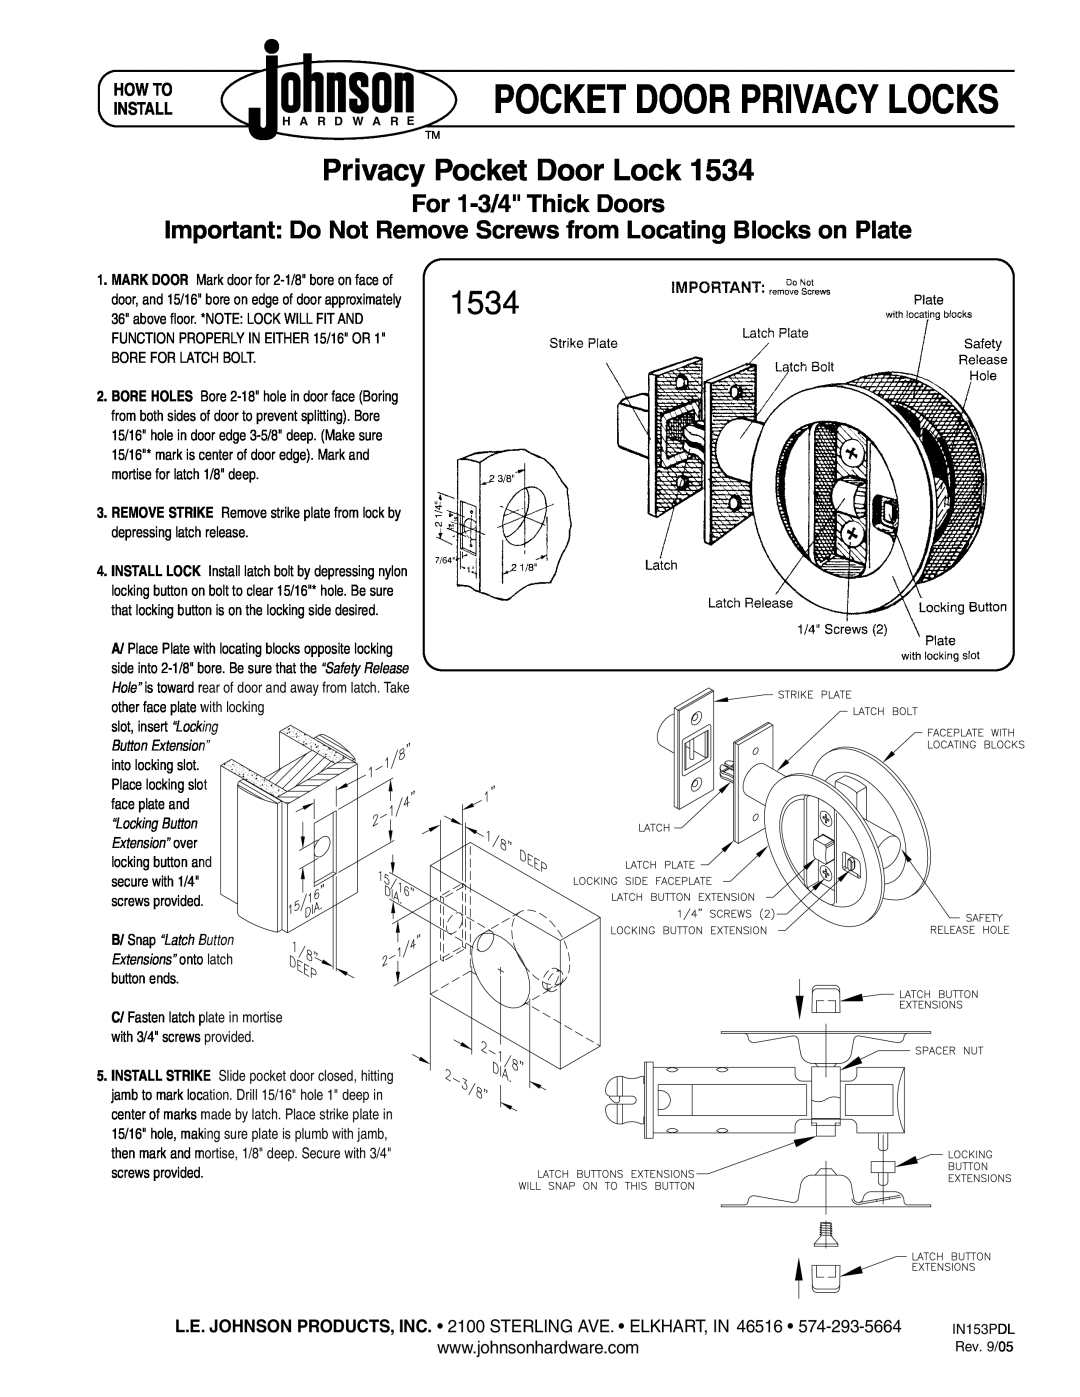 Johnson Hardware 1521 Pocket Door Privacy Locks, 1534, Privacy Pocket Door Lock, For 1-3/4Thick Doors, How To Install 